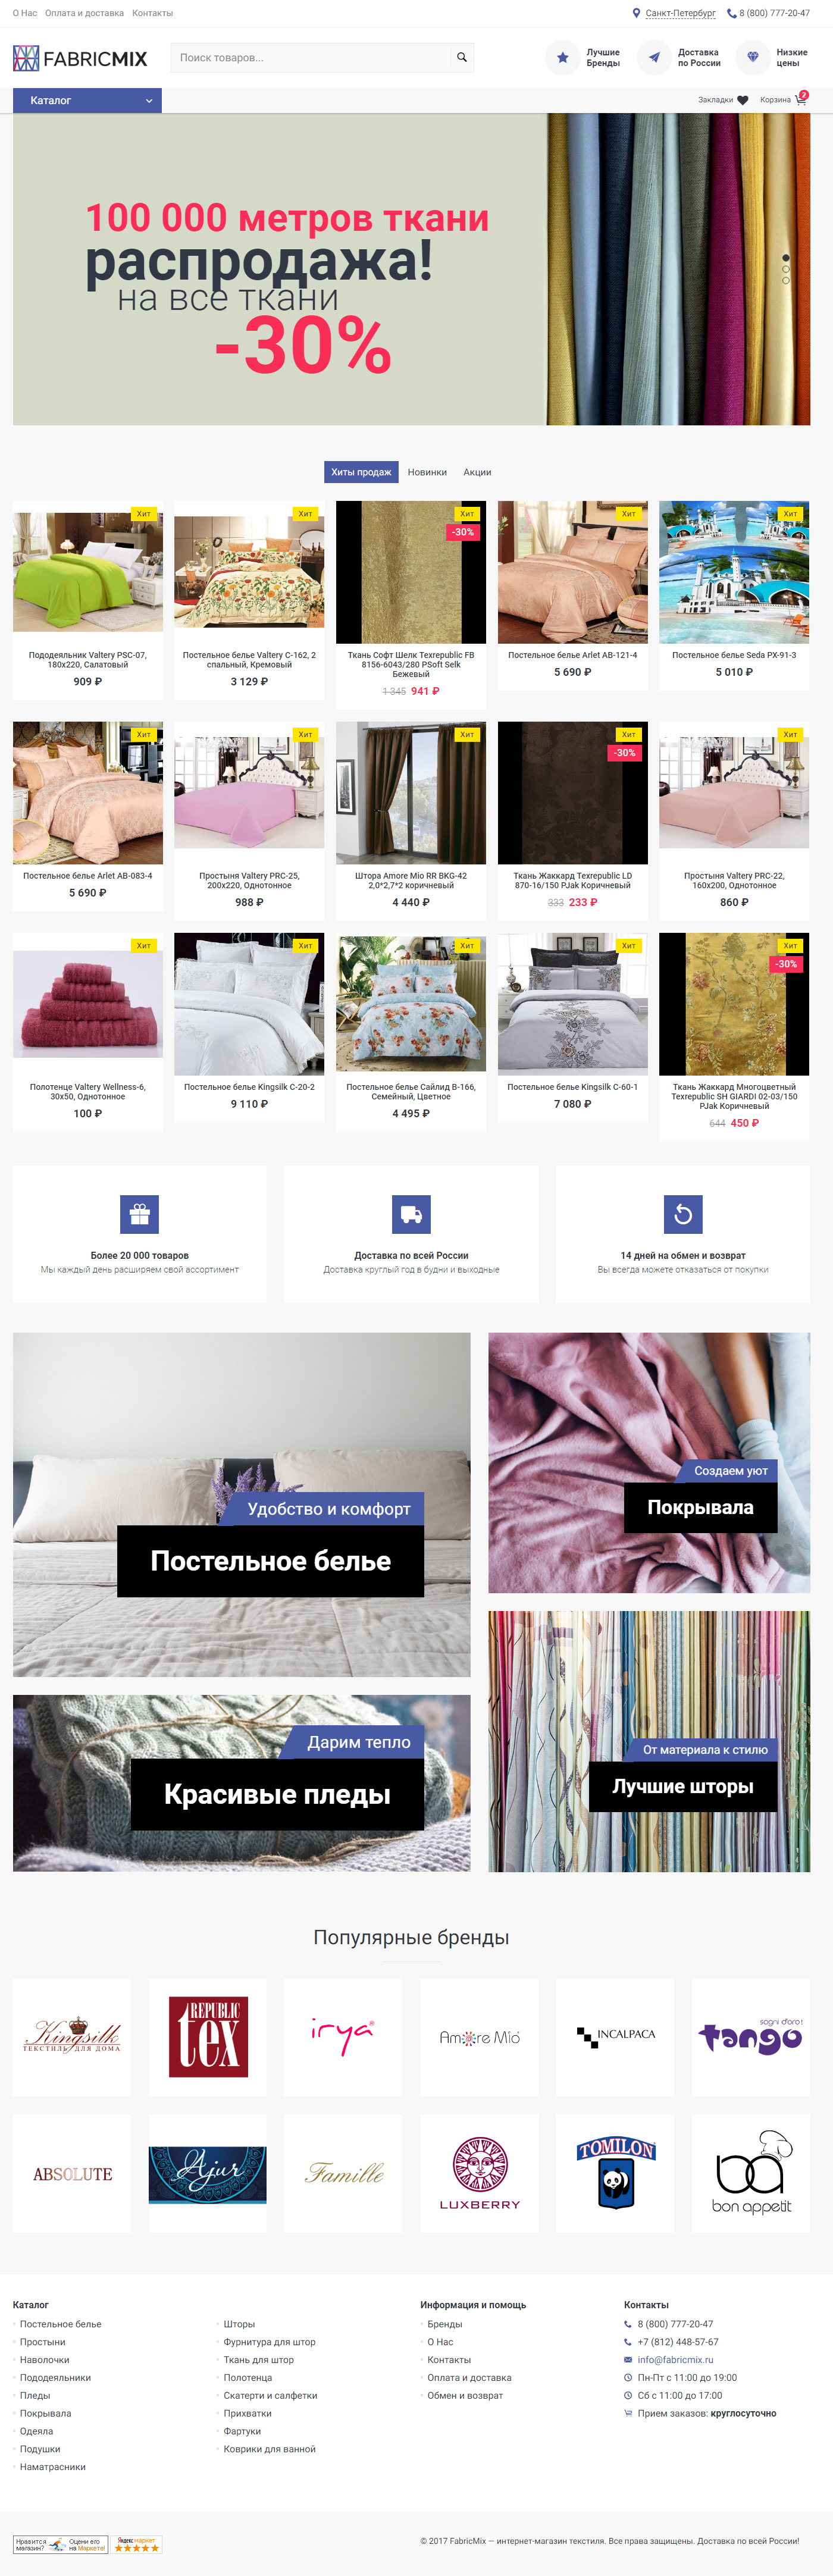 FabricMix.ru – интернет-магазин домашнего текстиля